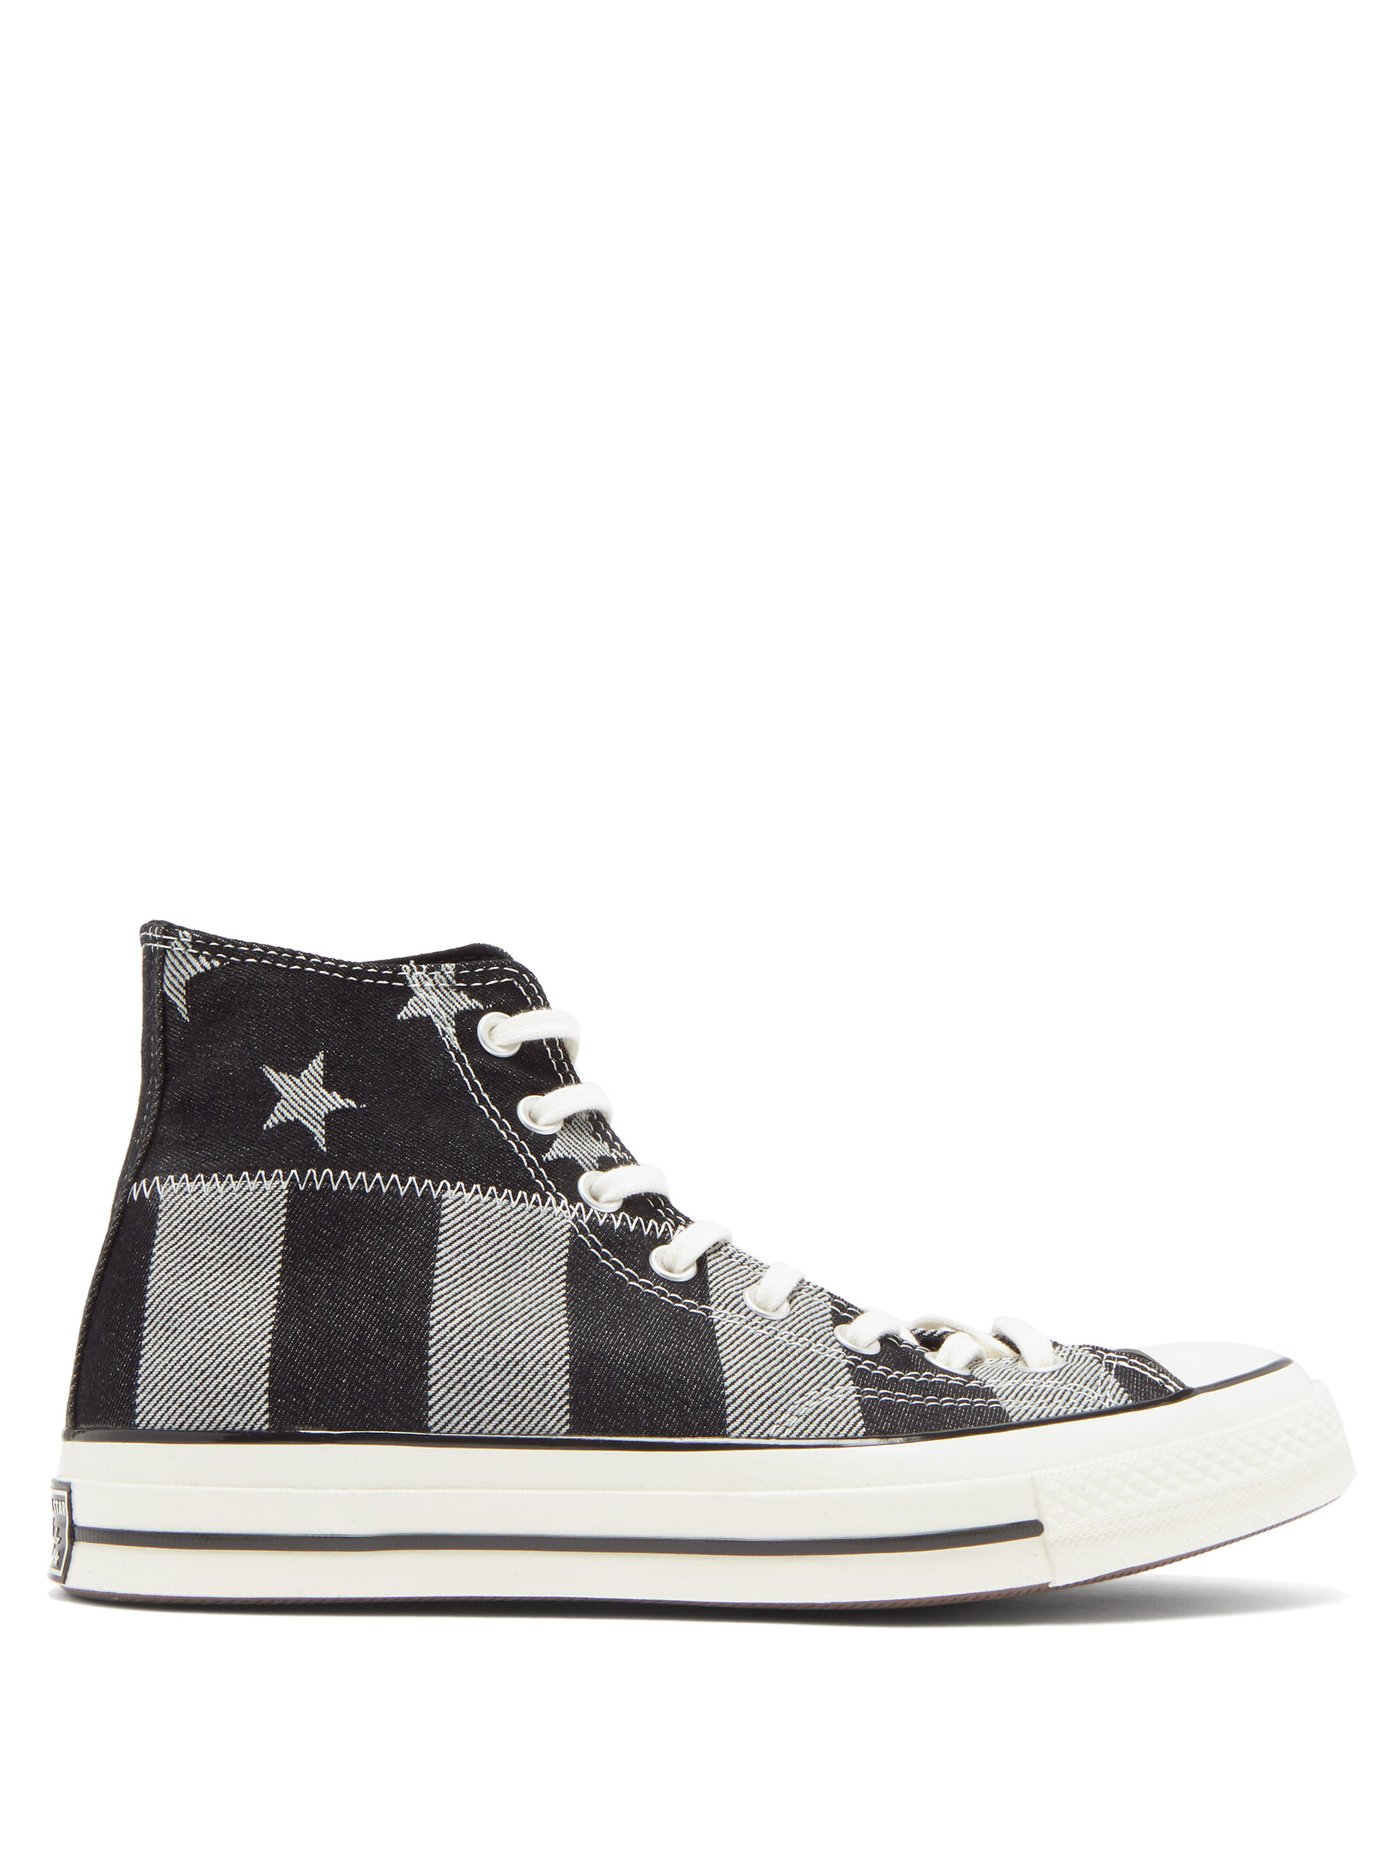 black and white striped converse